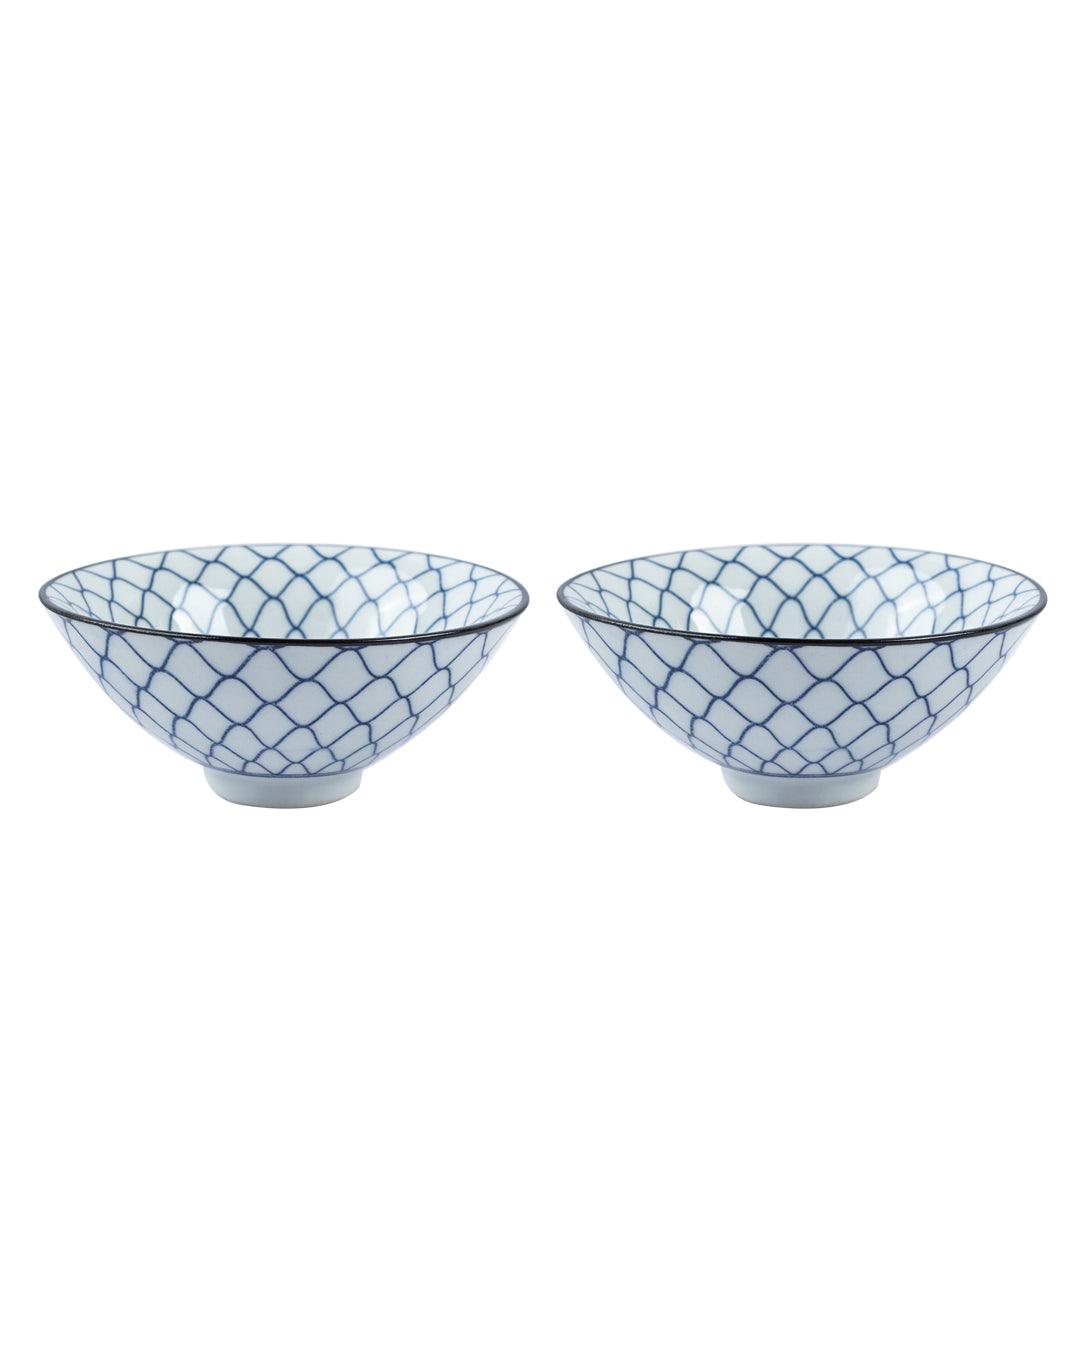 Bowls, Glossy Finish, Blue, Ceramic, Set of 2, 50 mL - MARKET 99